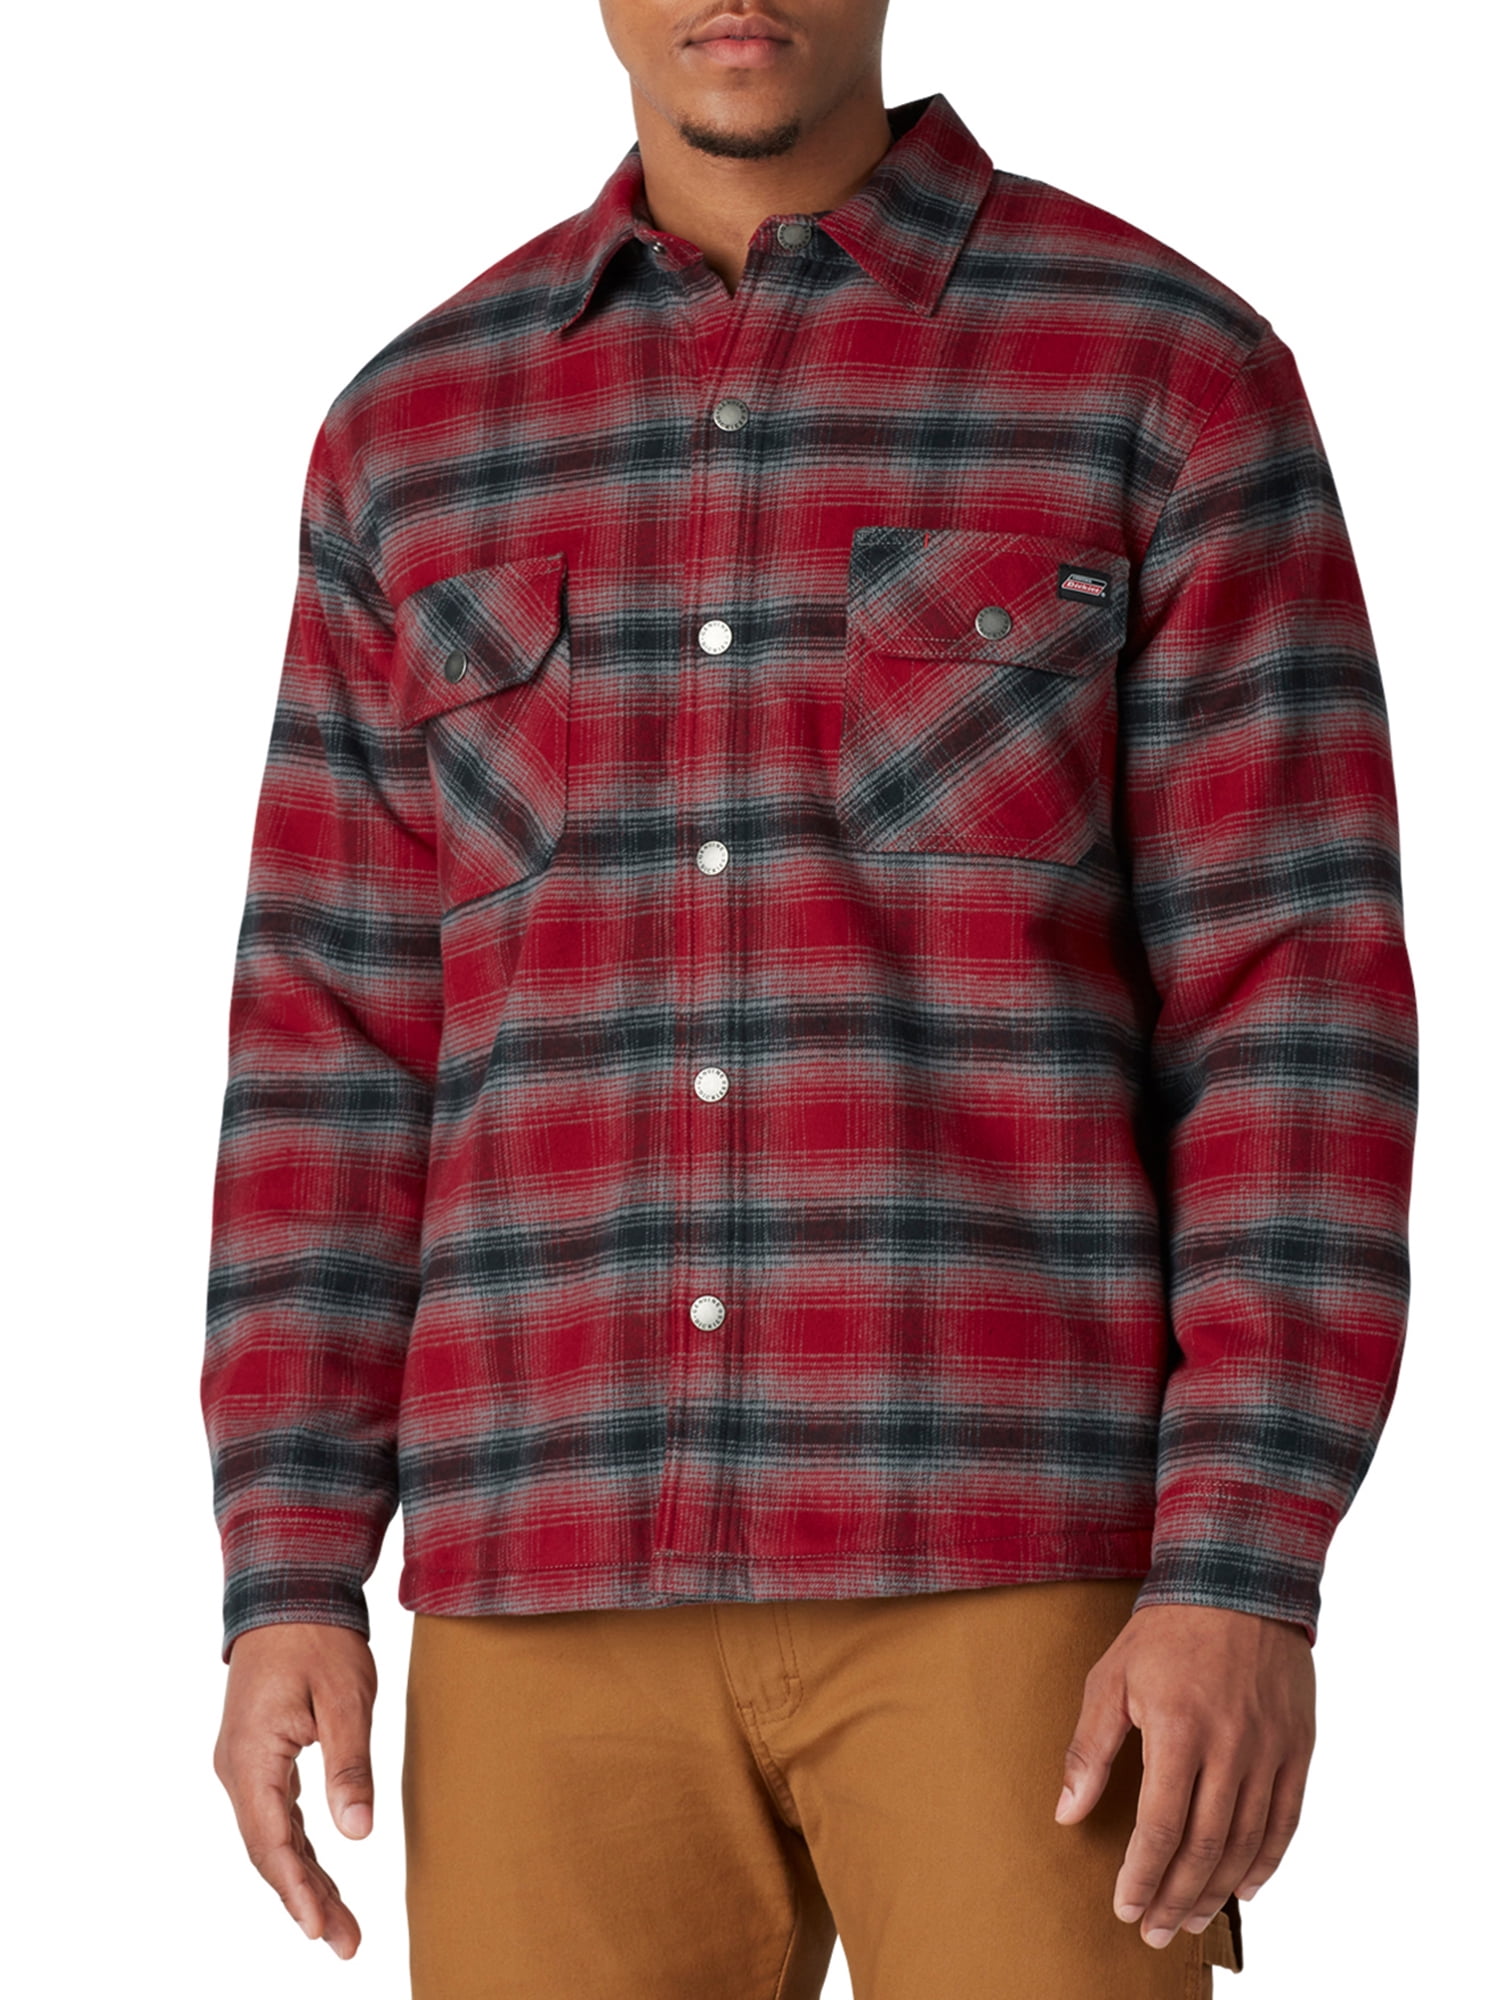 Genuine Dickies Men's HeavyWeight Flannel Shirt Jacket with Berber 